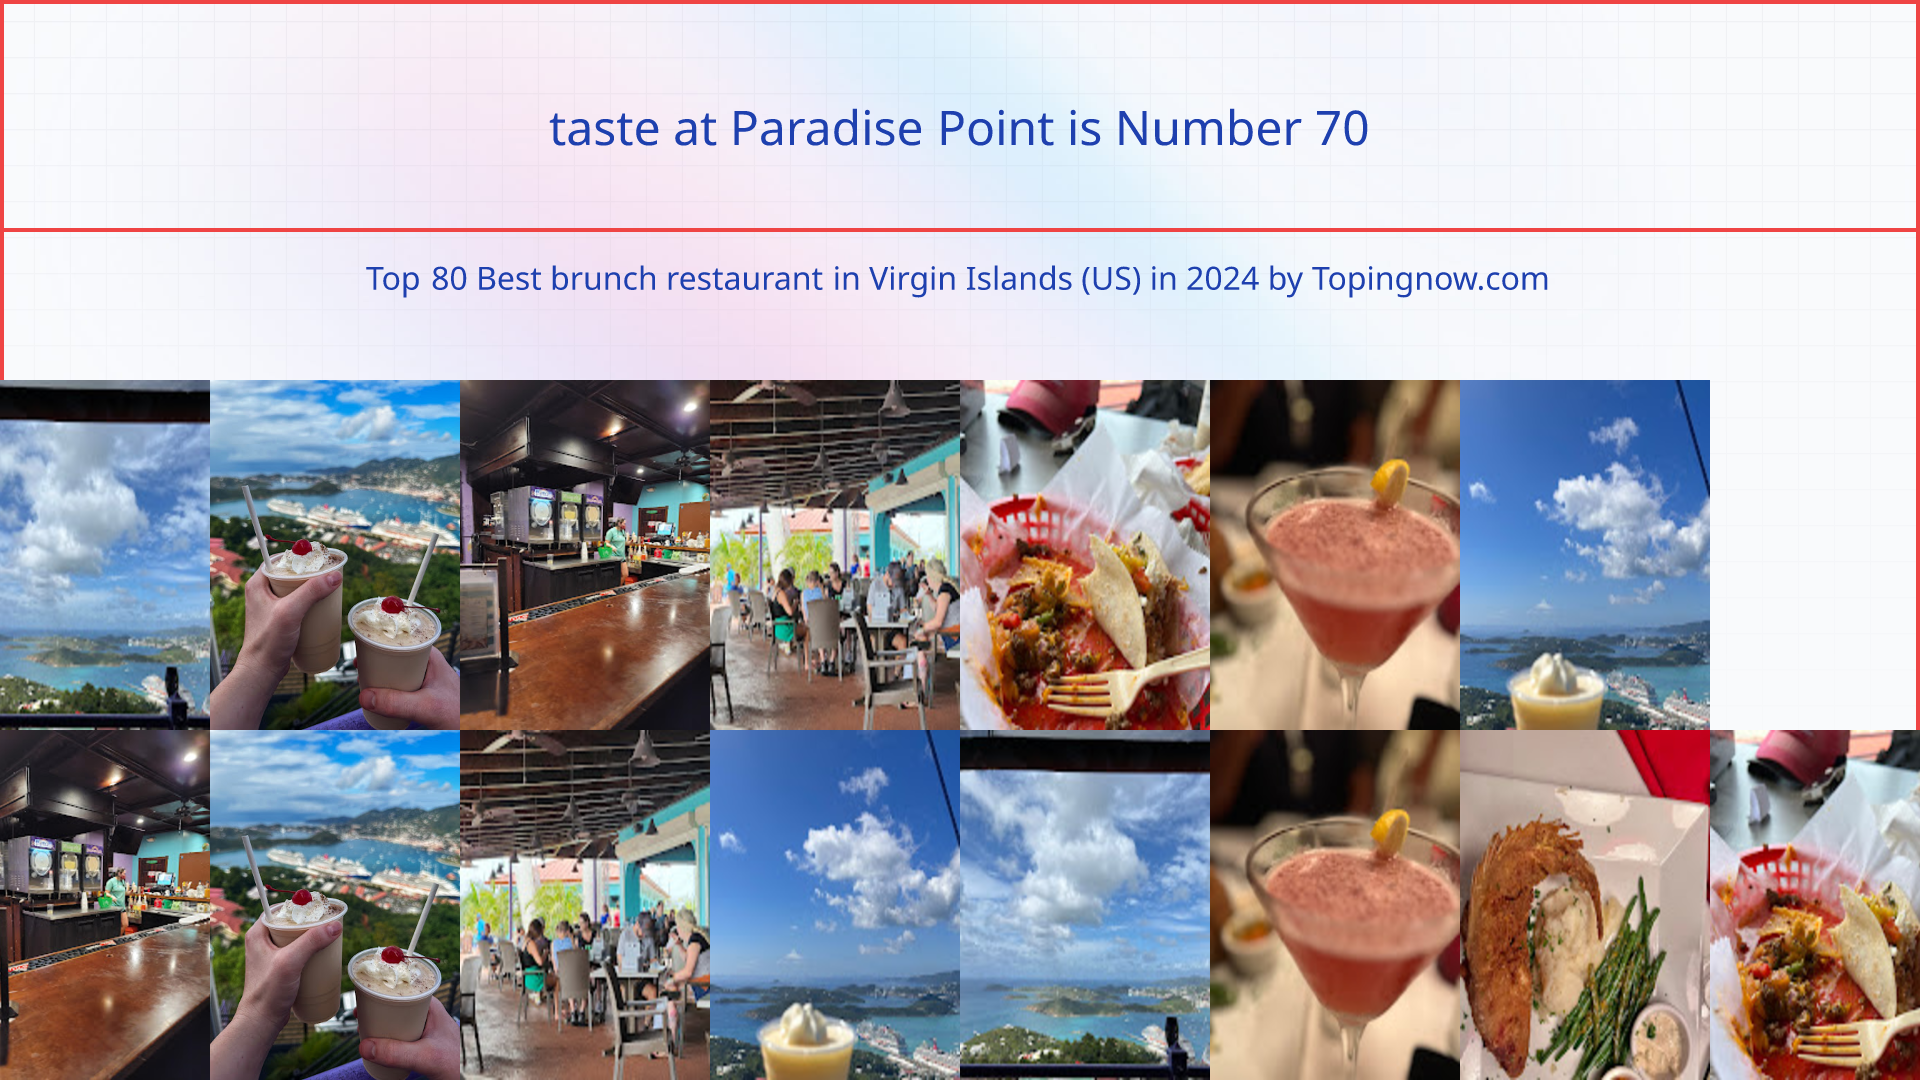 taste at Paradise Point: Top 80 Best brunch restaurant in Virgin Islands (US) in 2024